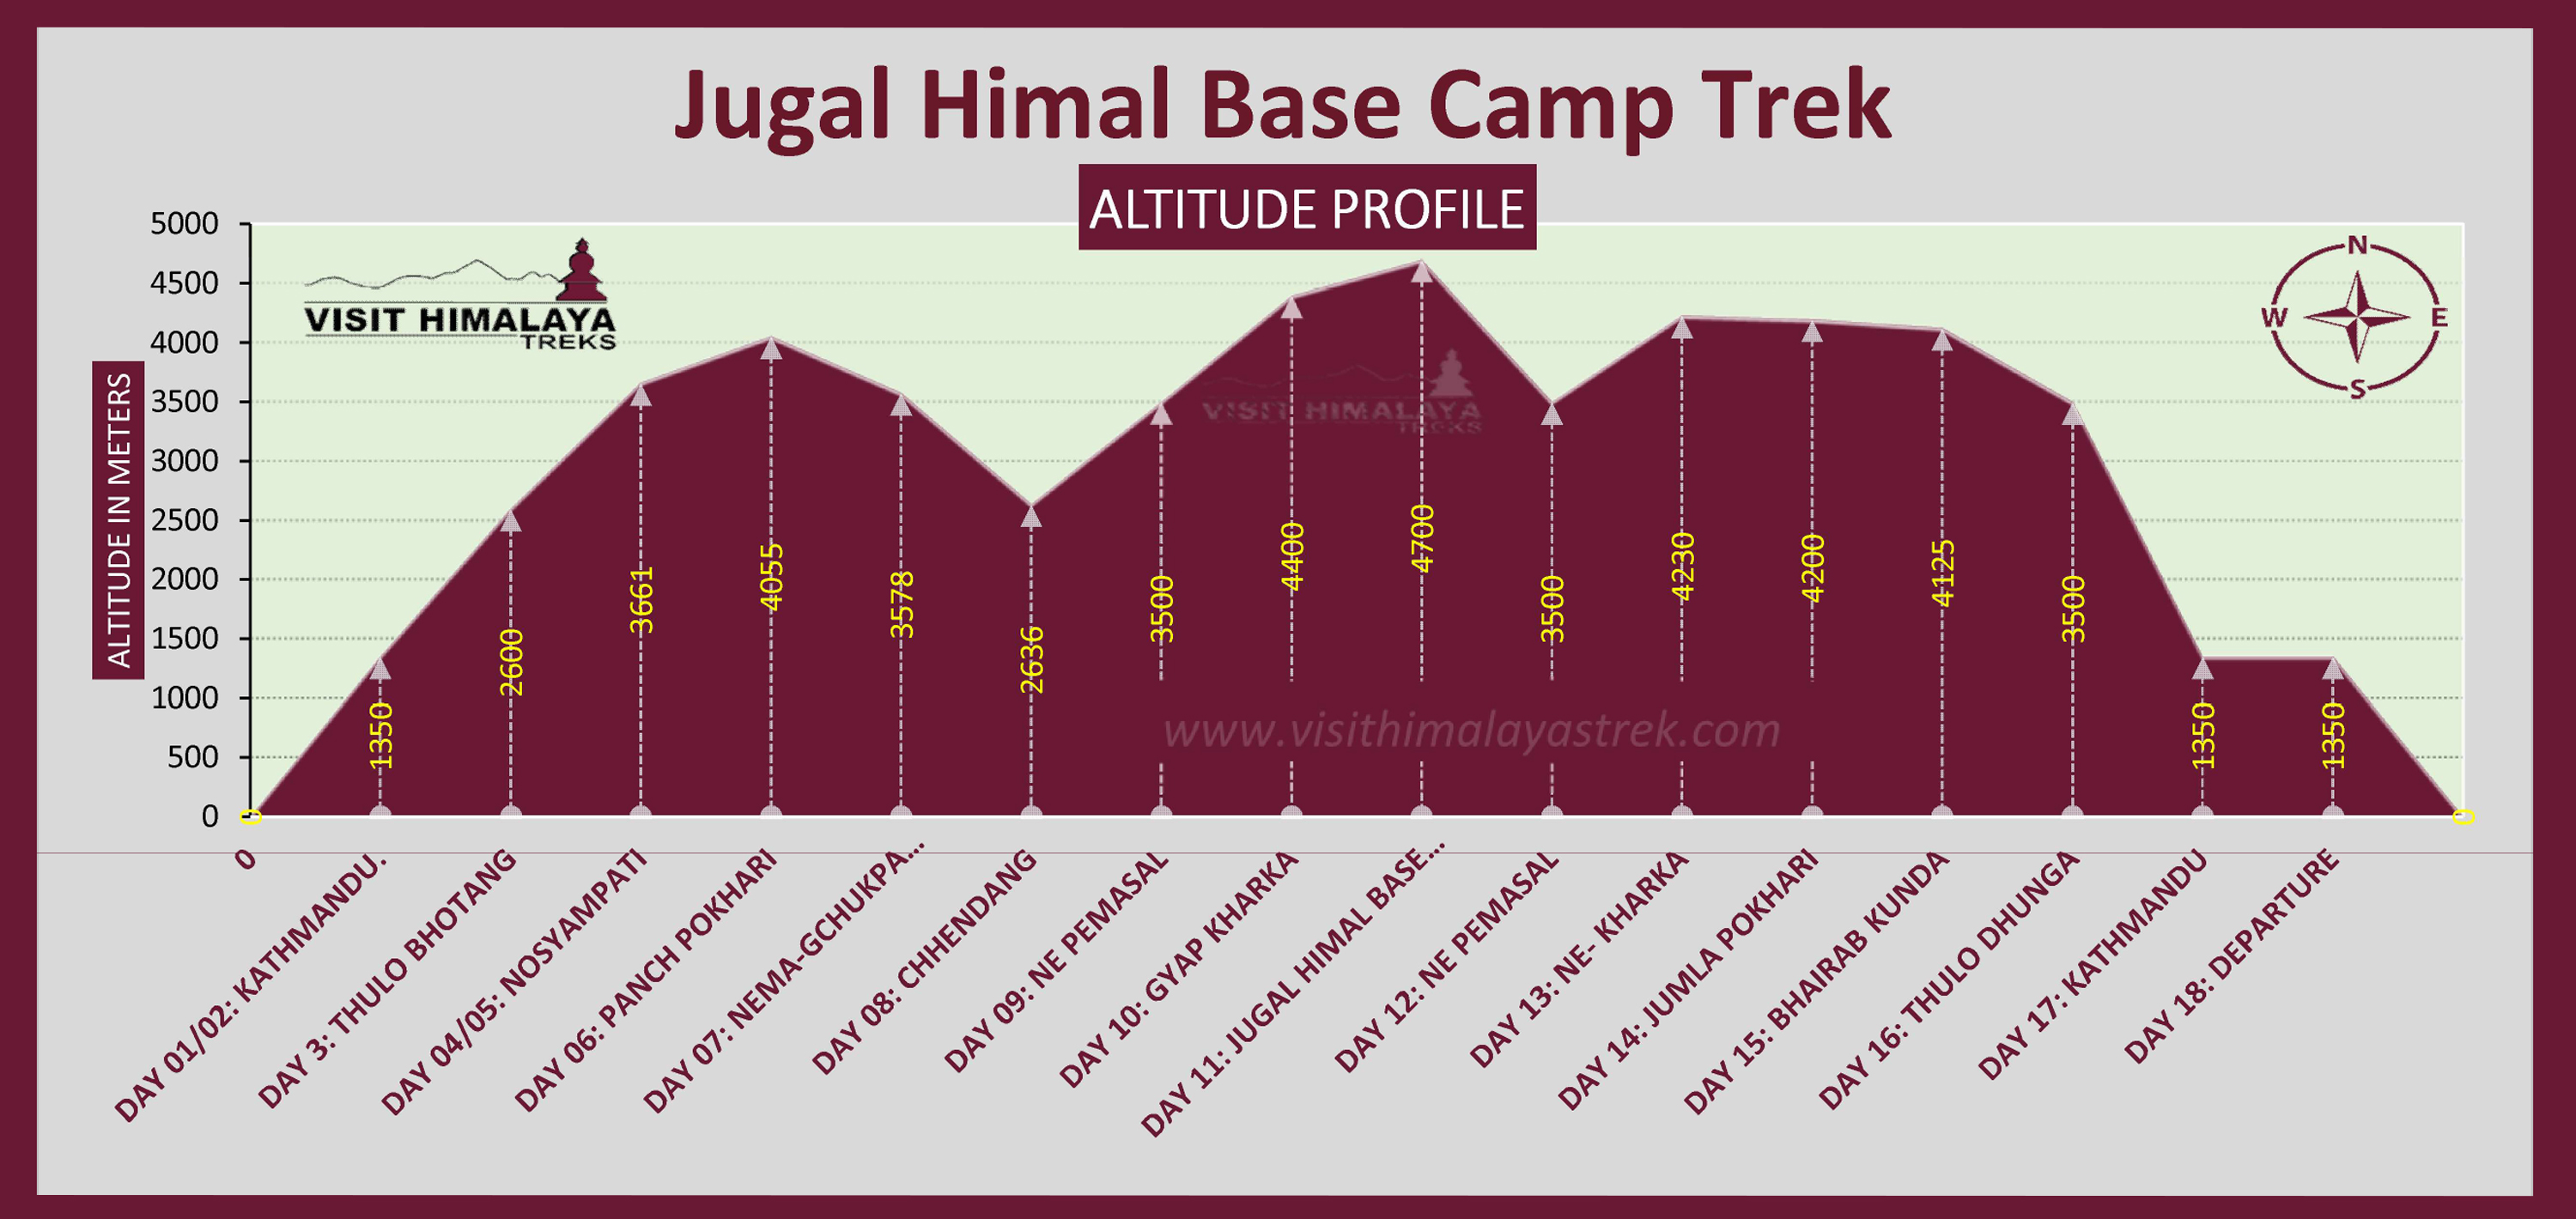 Jugal Himal Base Camp Tres Altitude profile